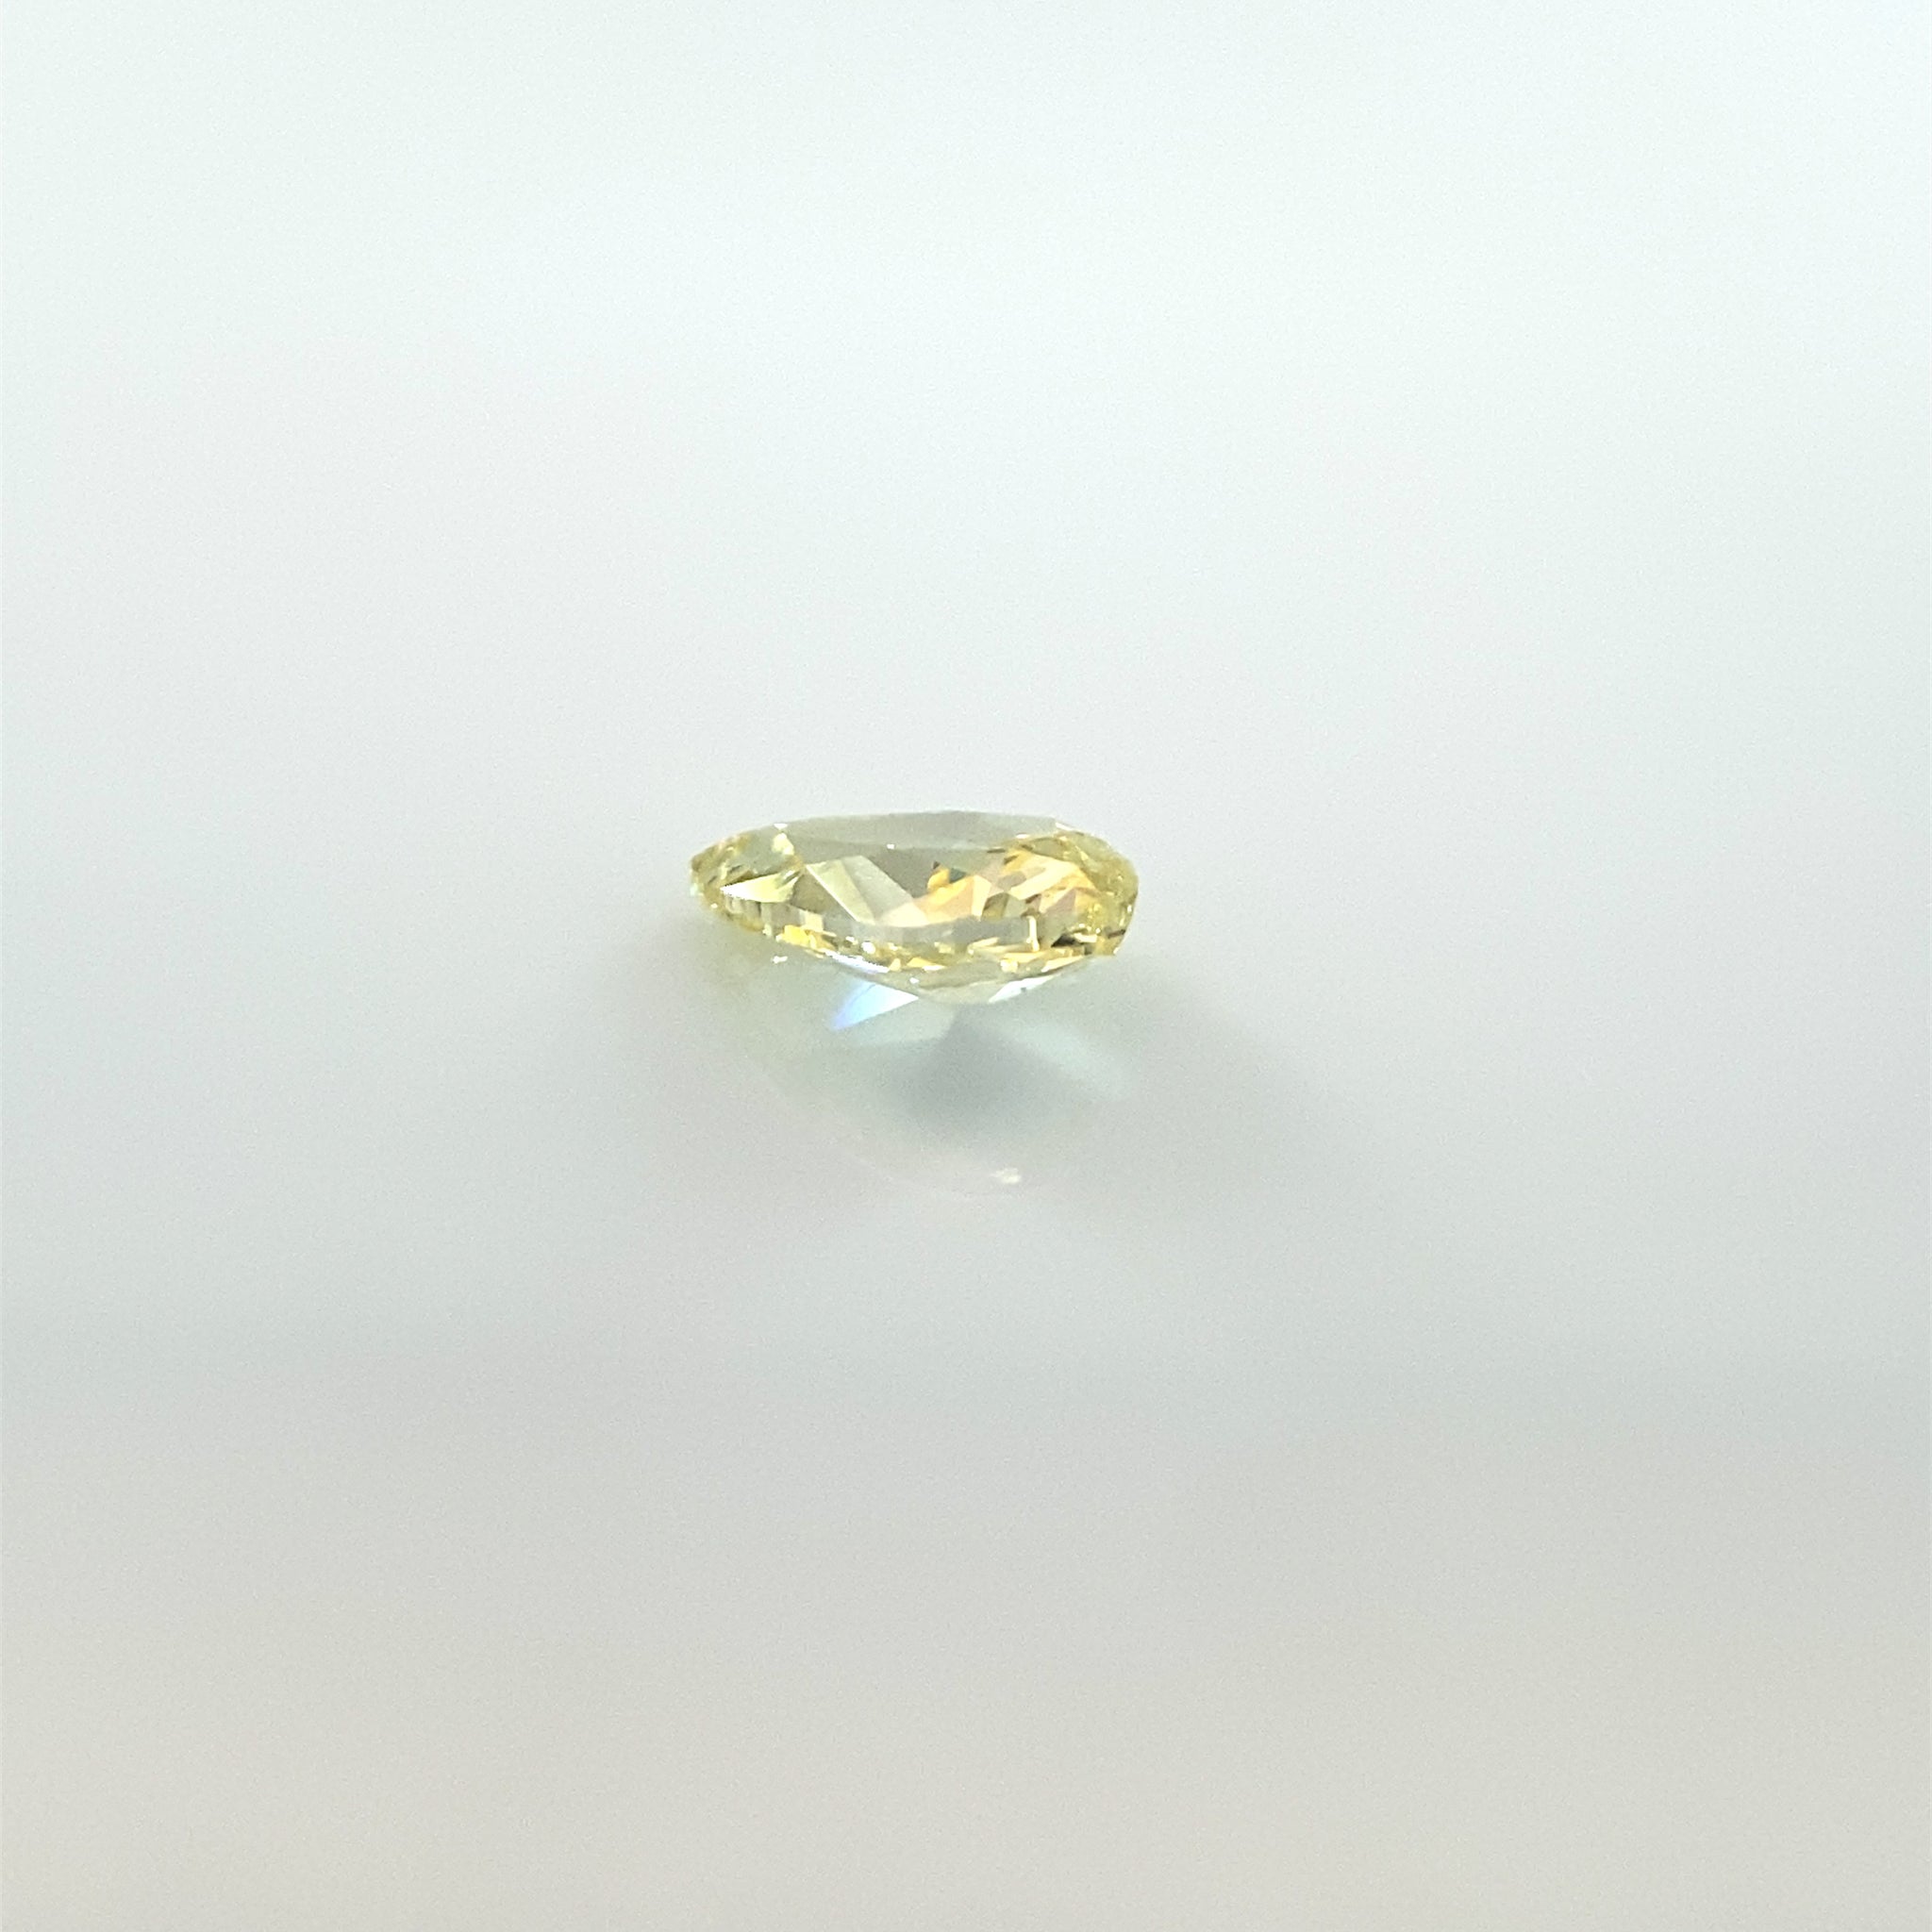 Żółty diament Fancy Yellow 0,26 Ct / VVS2